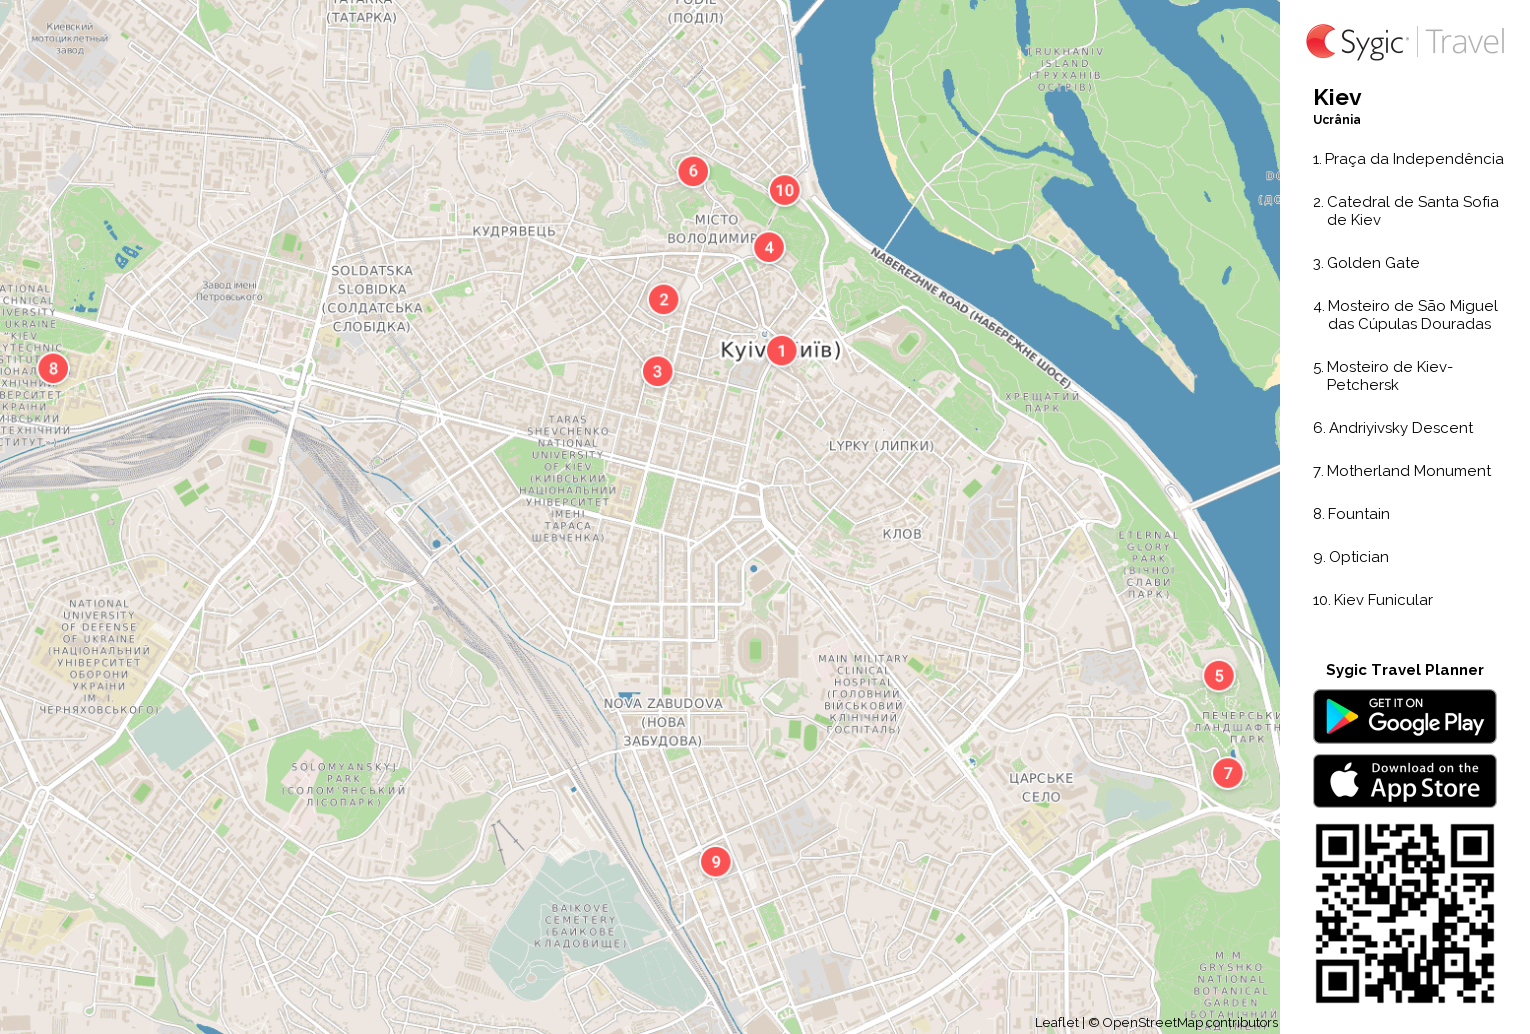 kiev-mapa-turistico-em-pdf